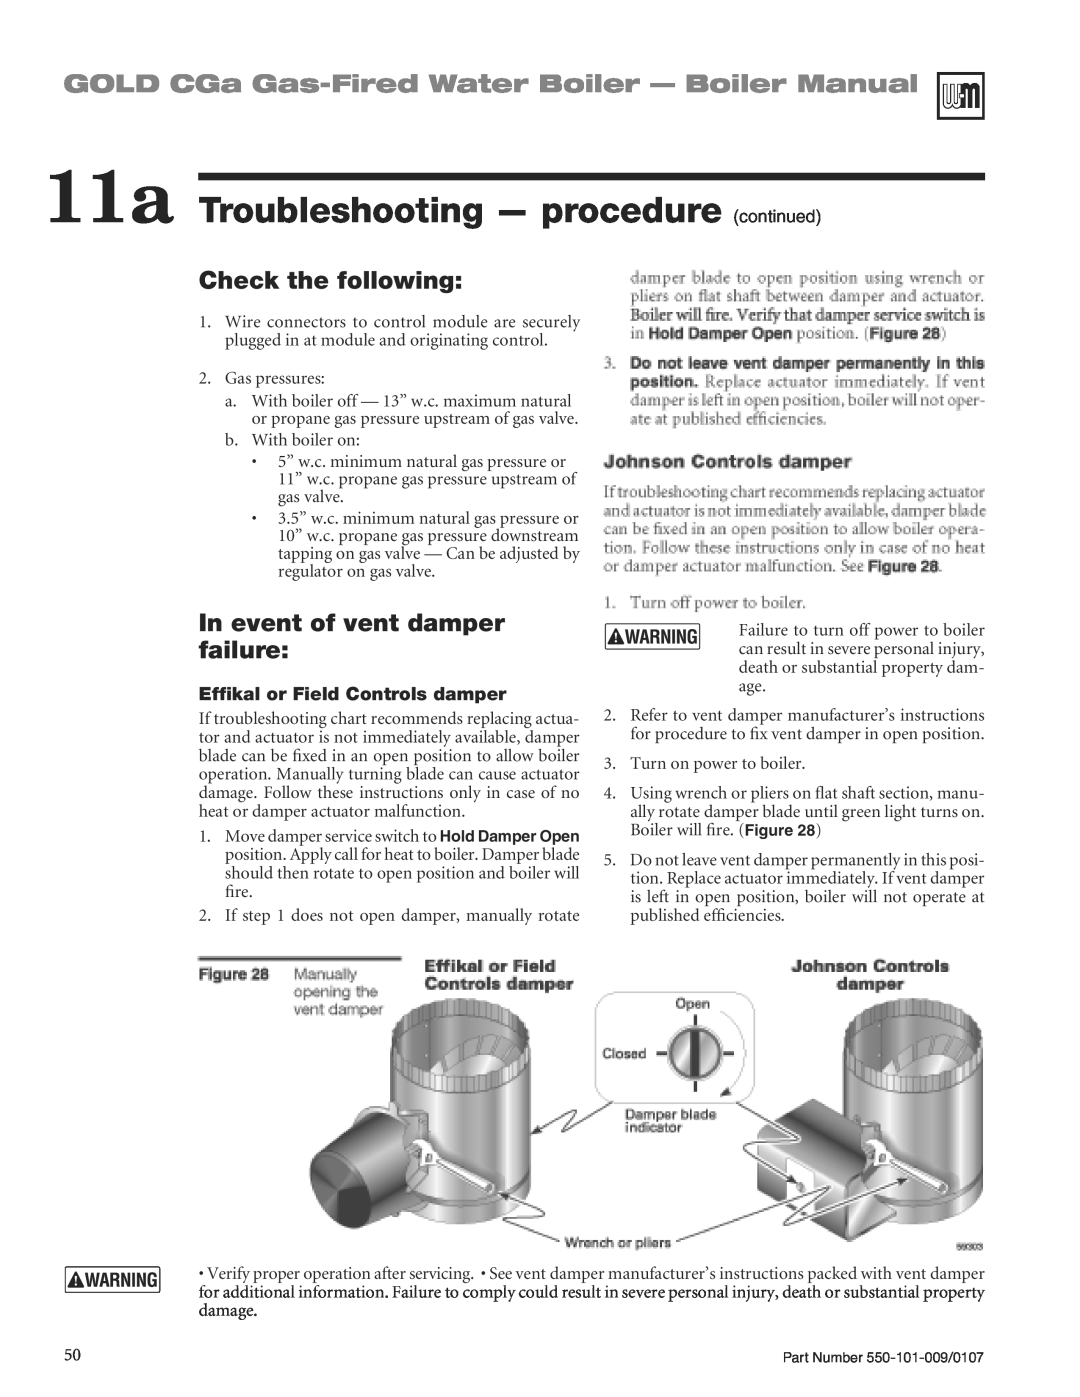 Weil-McLain CGA25SPDN manual 11a Troubleshooting - procedure continued, GOLD CGa Gas-FiredWater Boiler - Boiler Manual 